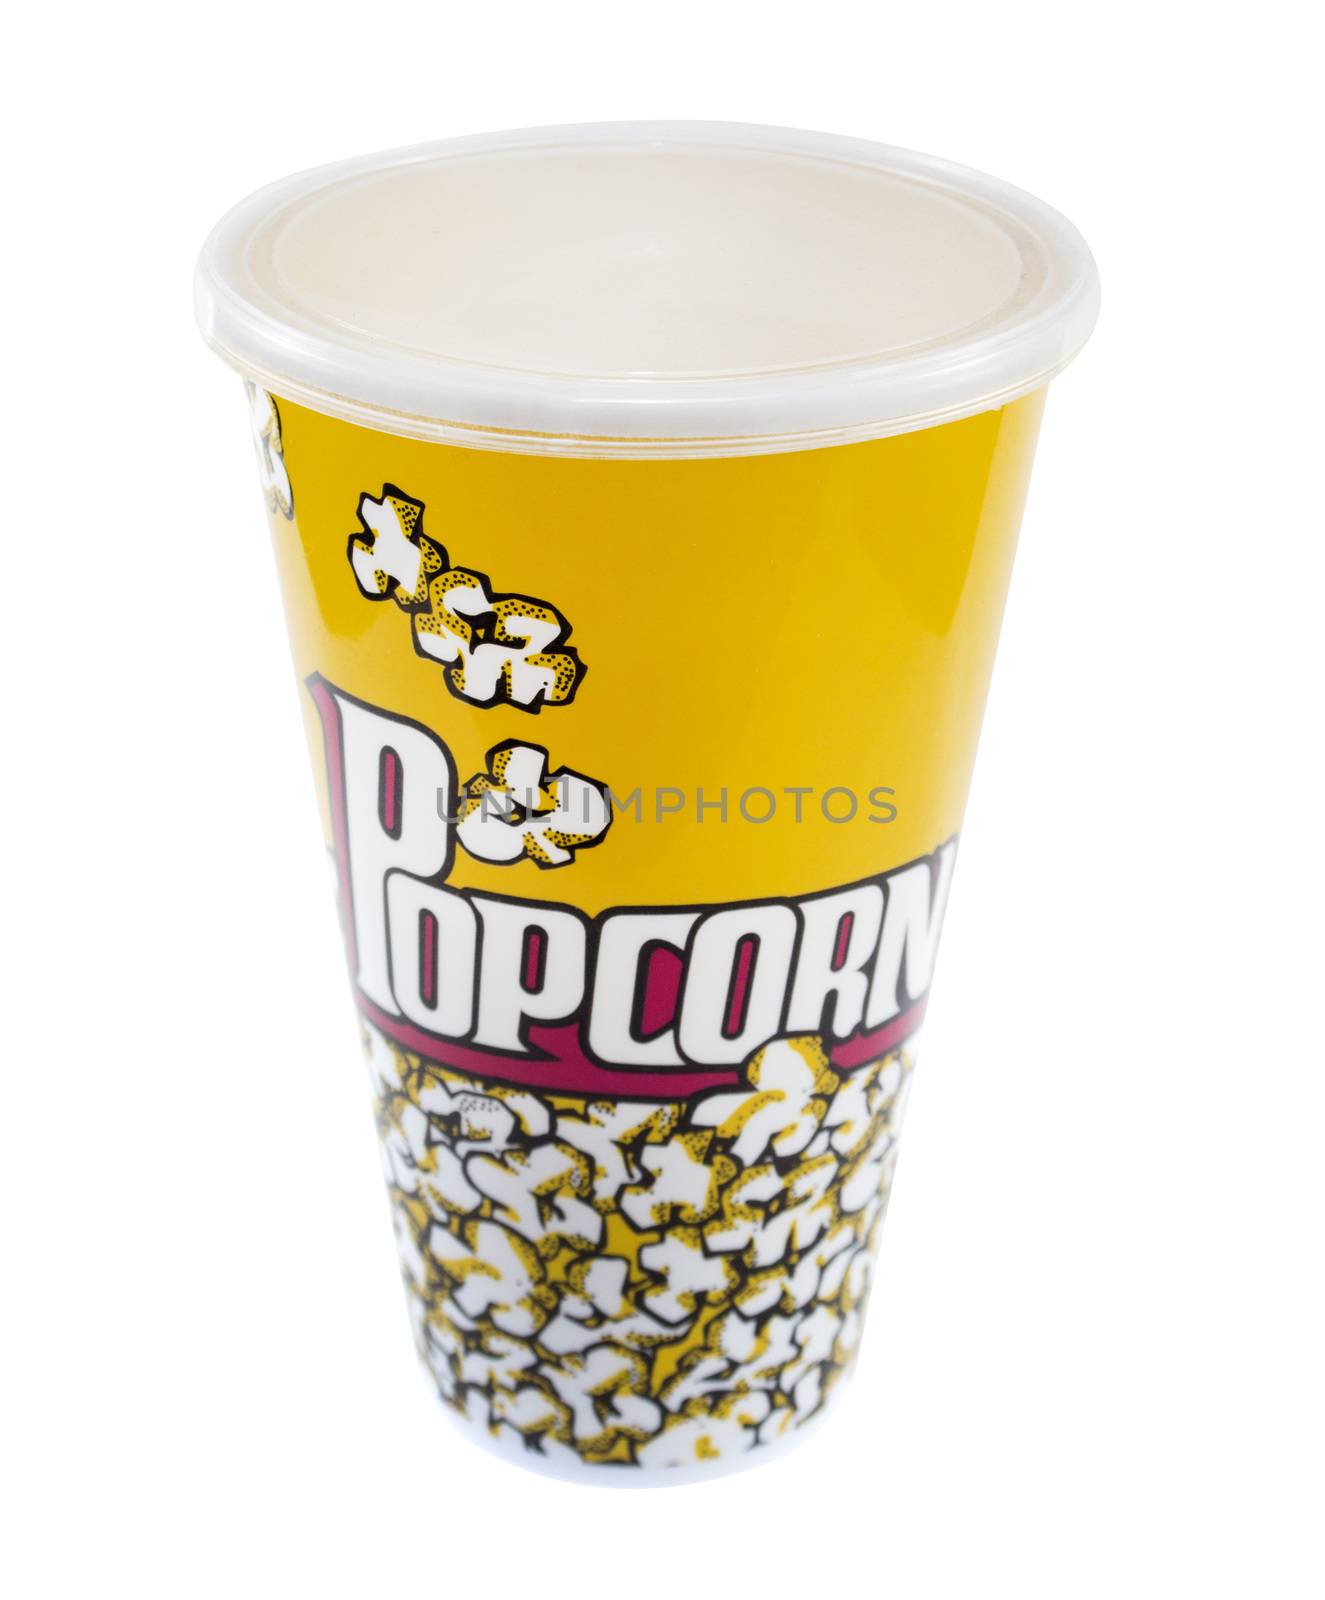 Popcorn bucket by designsstock